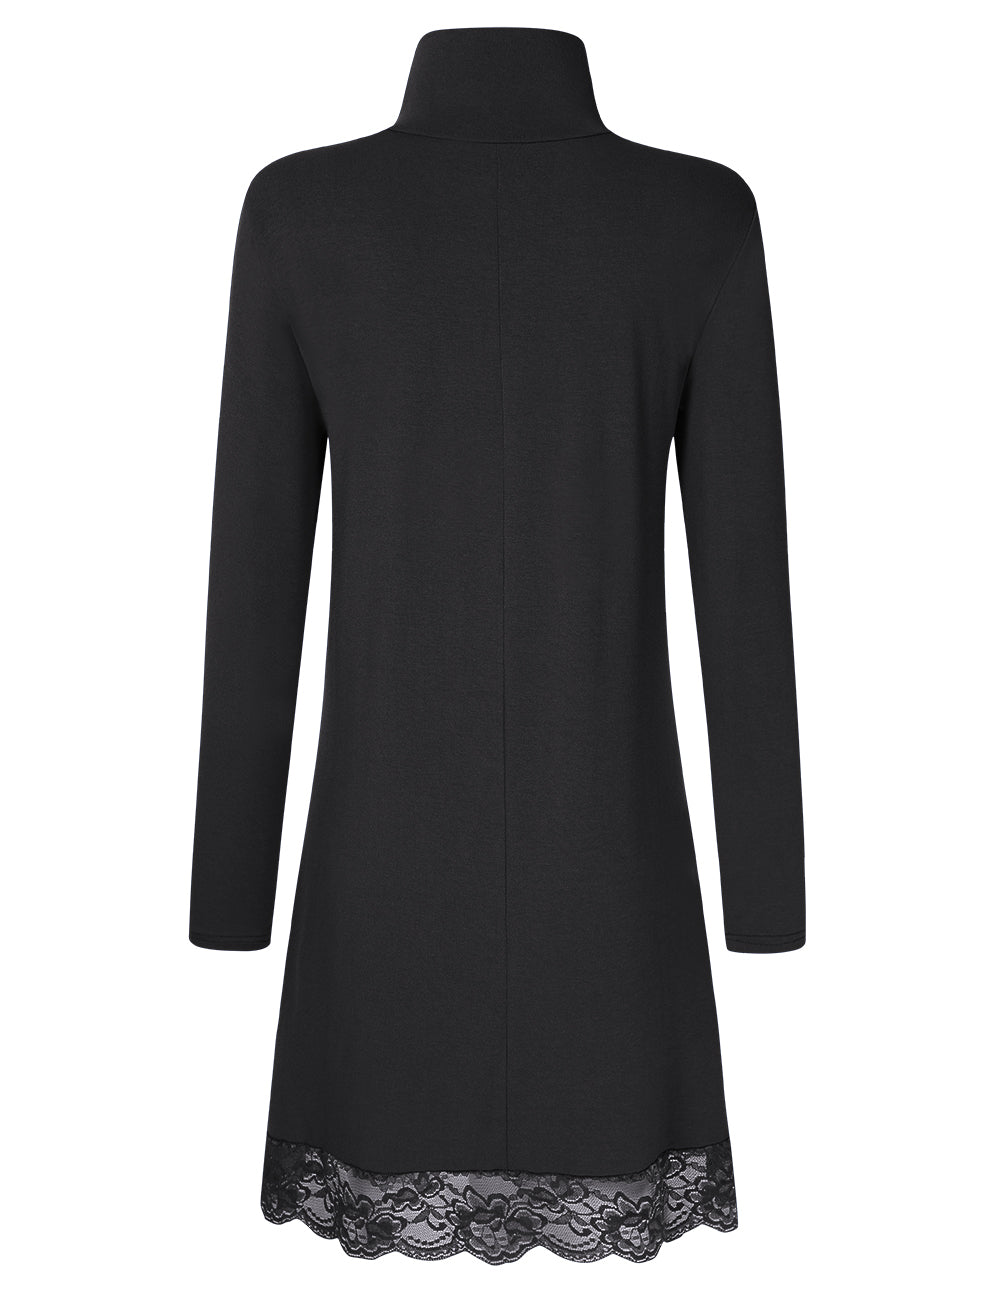 YESFASHION Women's Long Sleeve Knit Turtleneck Lace Cotton Casual Dress Black